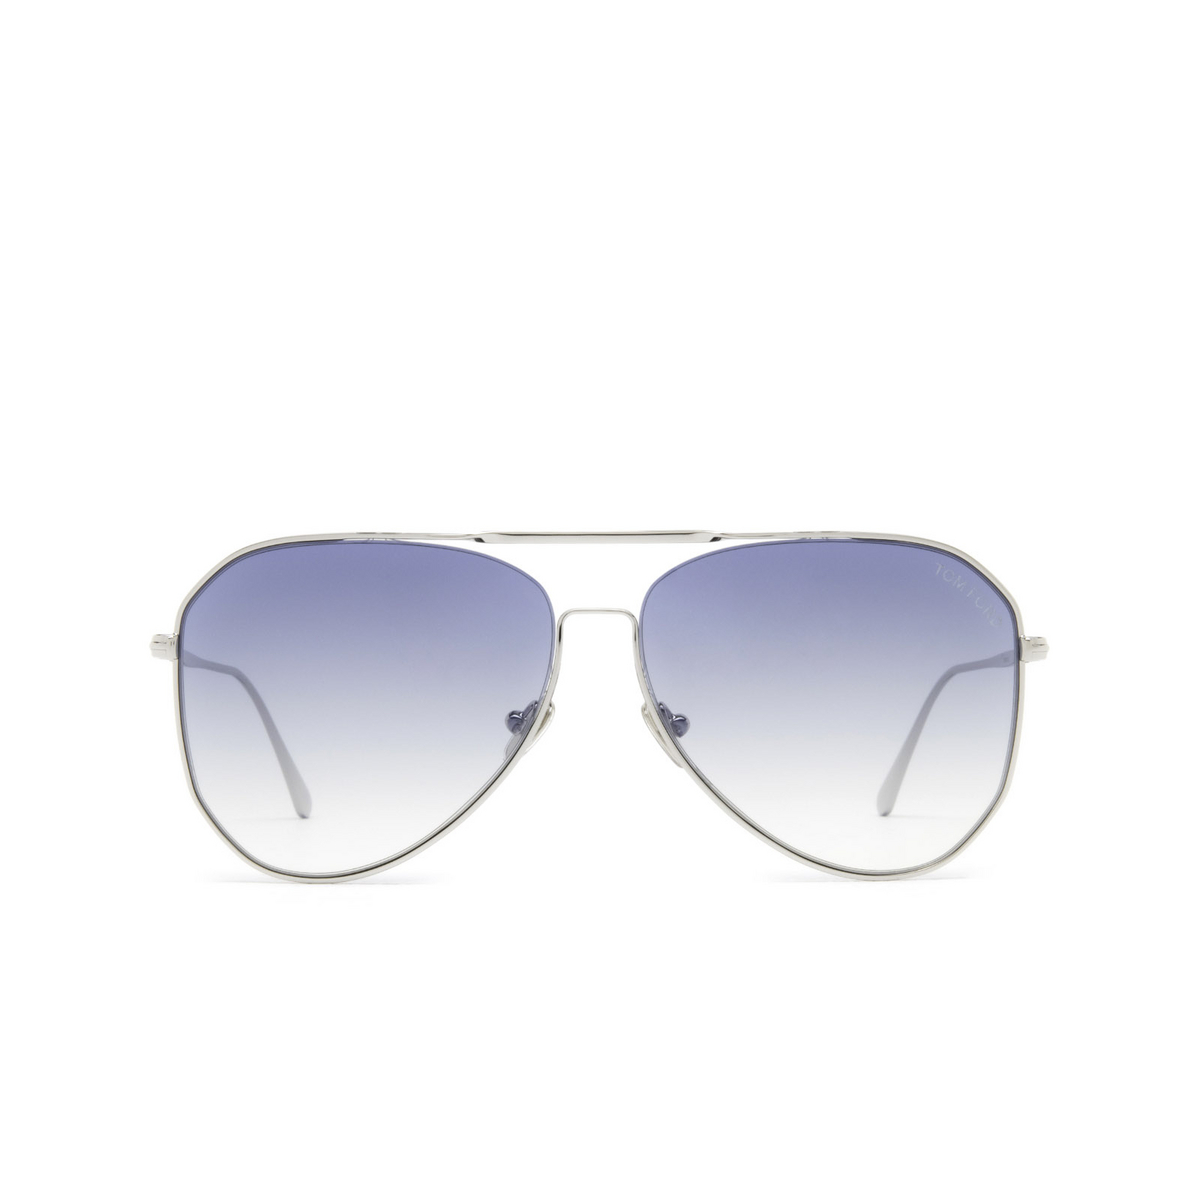 Tom Ford CHARLES-02 Sunglasses 16W Palladium - front view